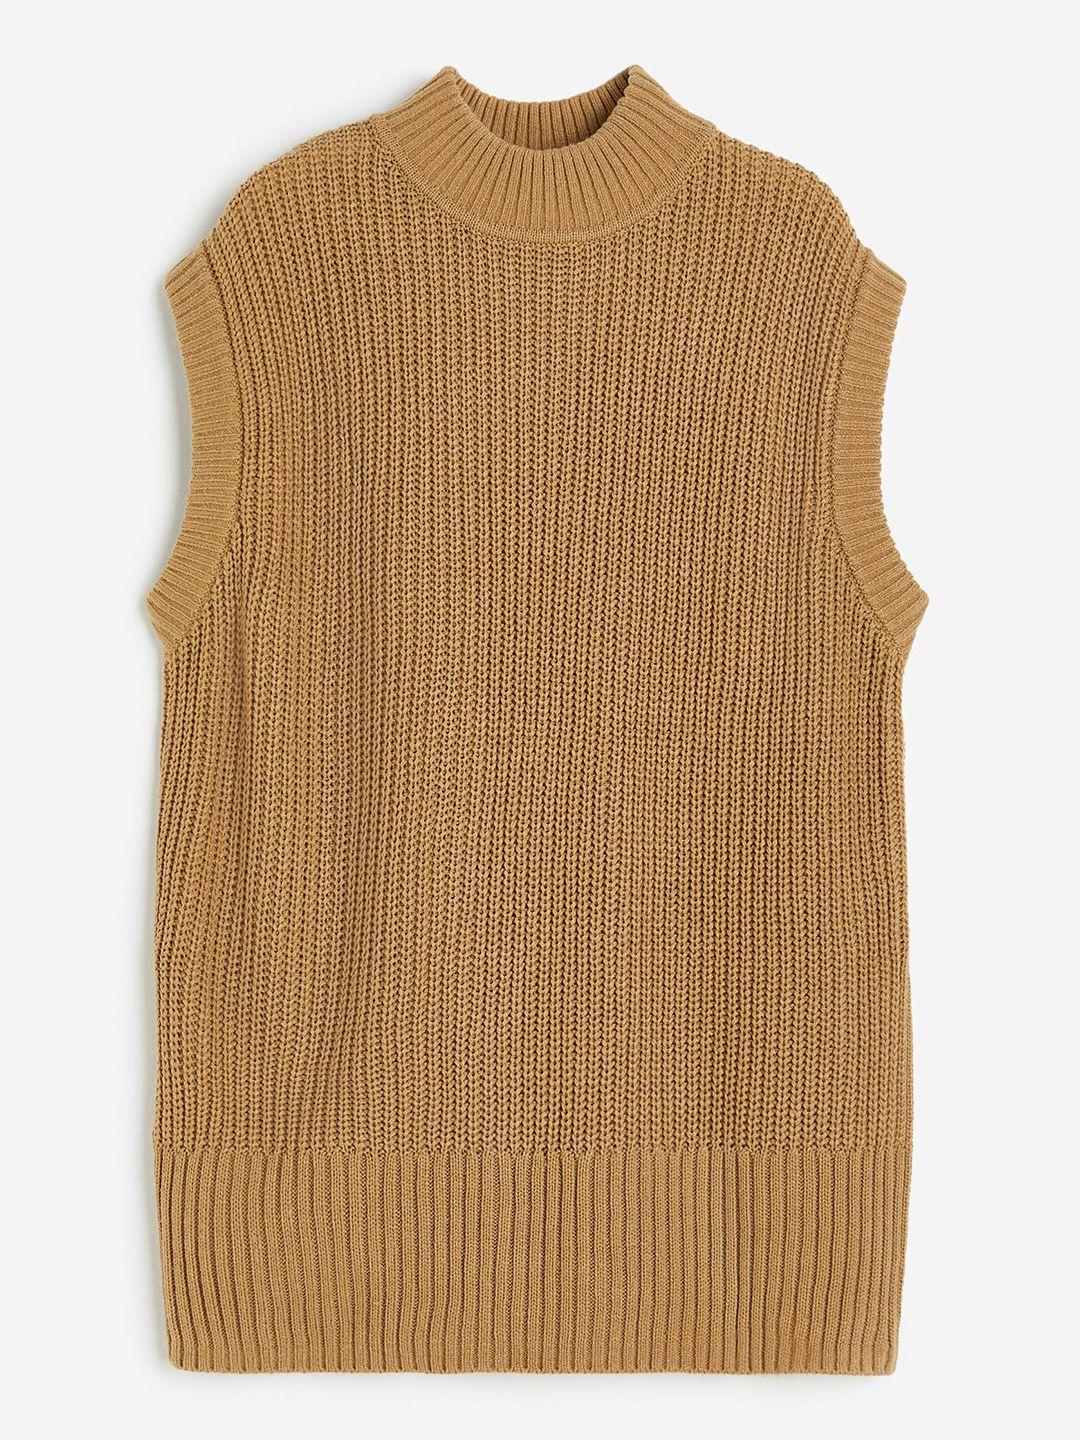 h&m rib-knit acrylic sweater vest